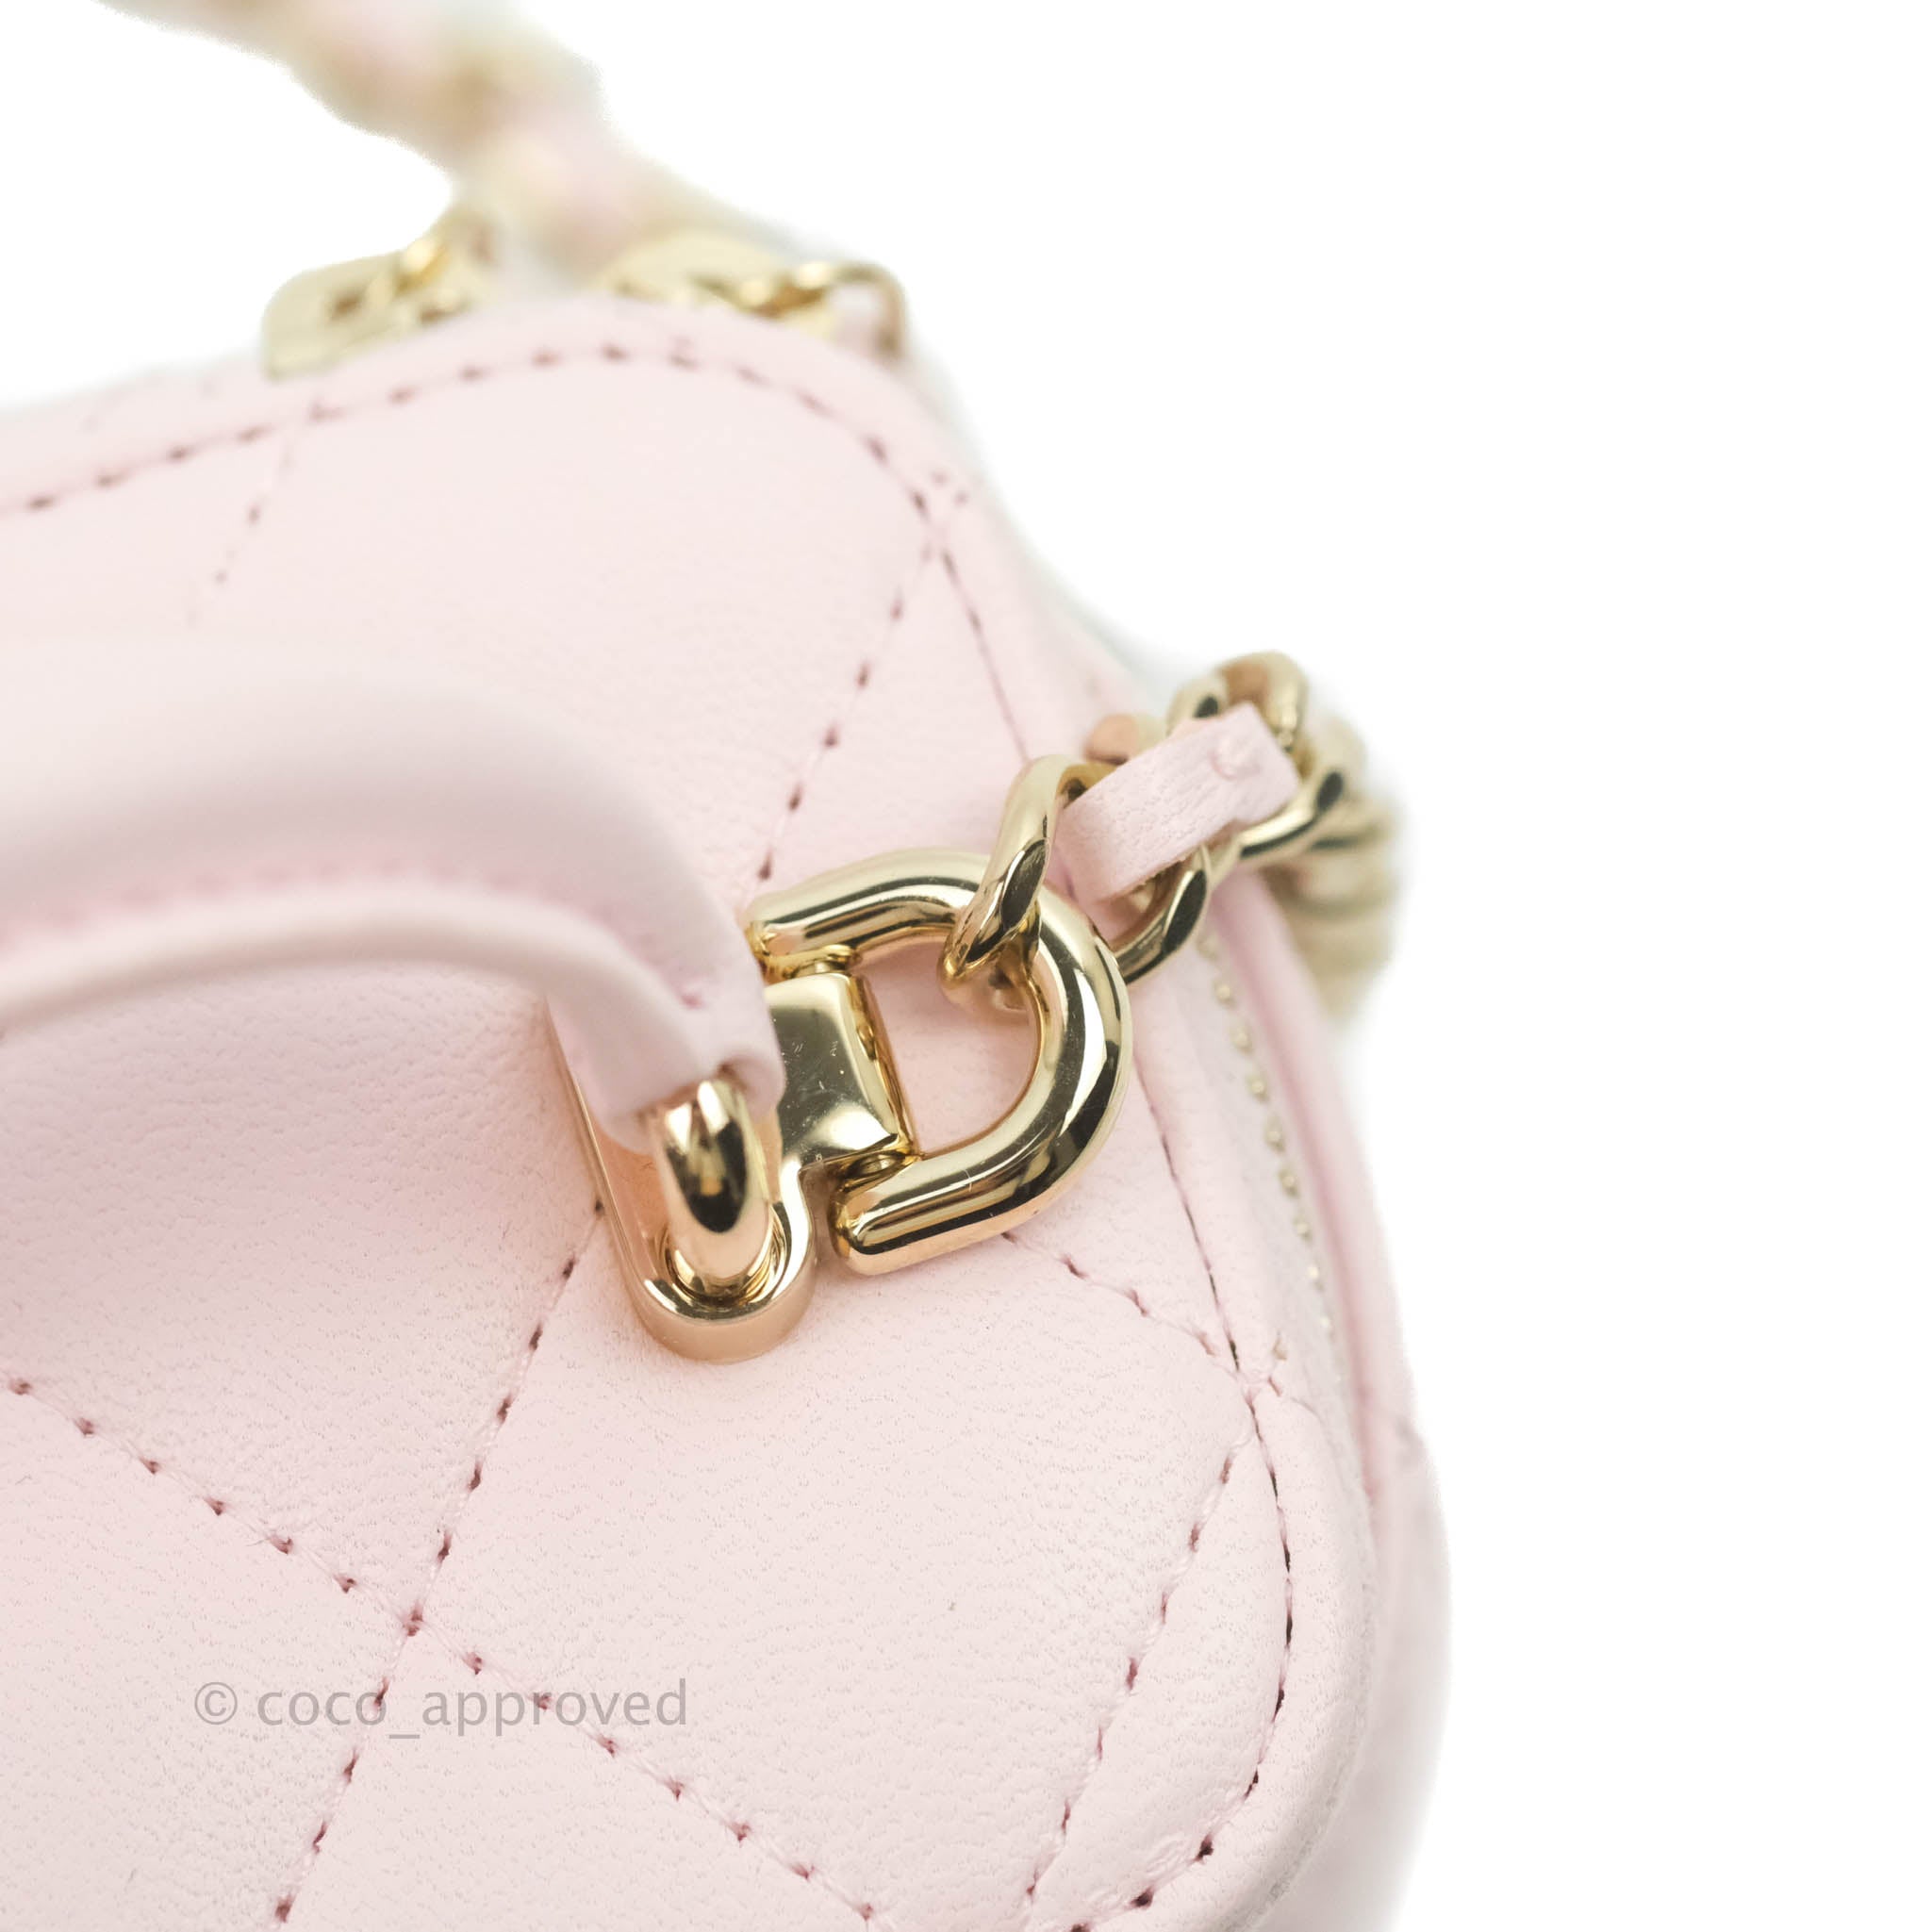 NWT! 💕22C CHANEL Sakura Pink Mini Square Vanity 💕Grained Gold HW Chain Bag